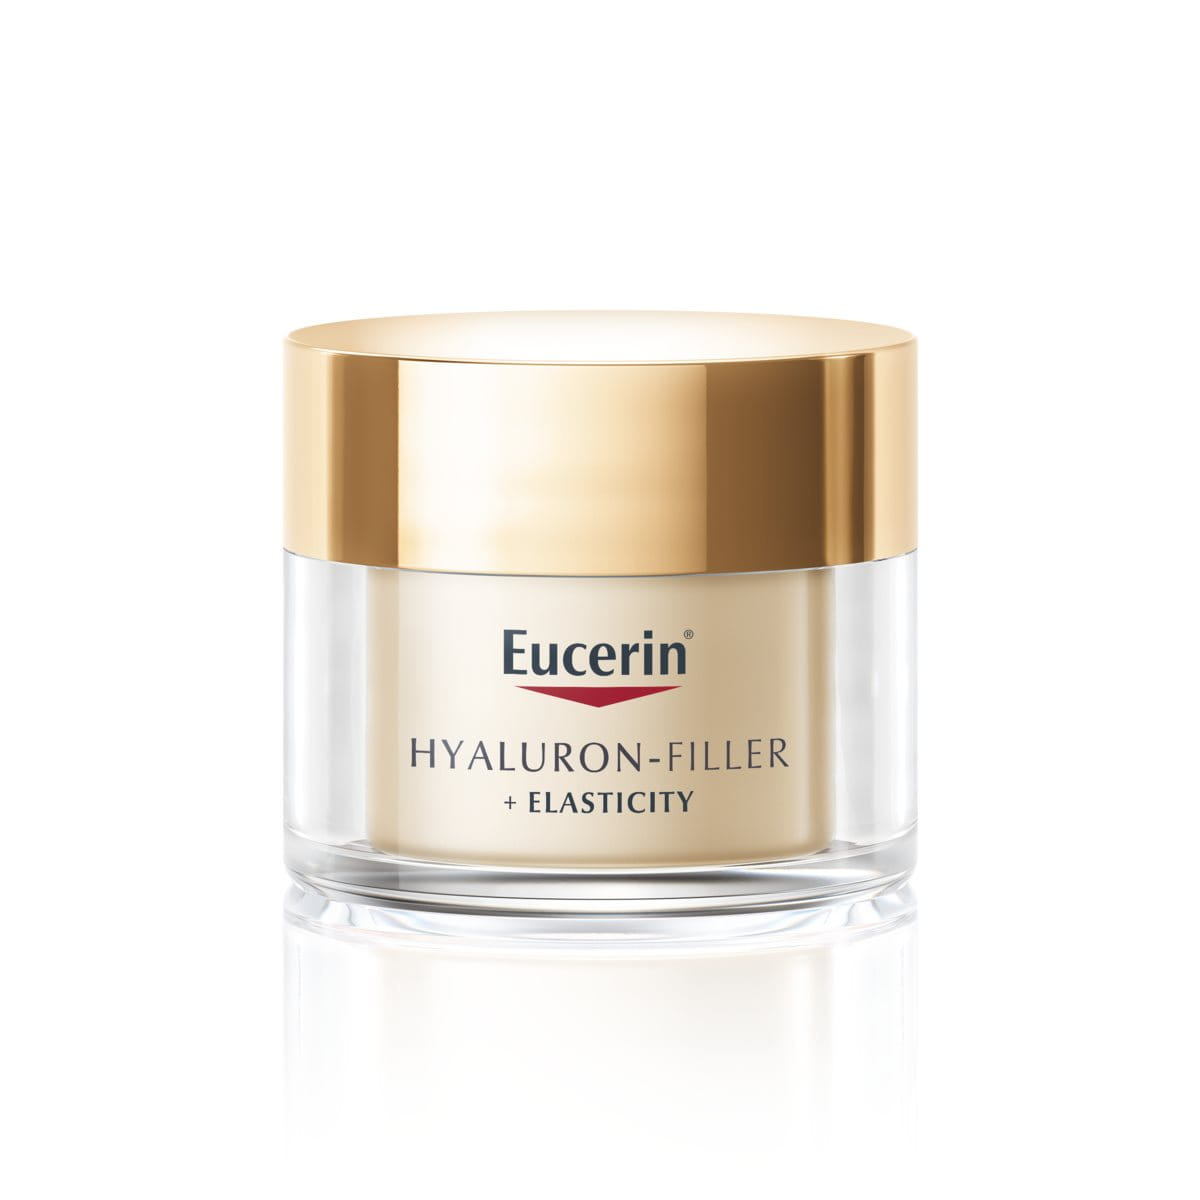 Eucerin Hyaluron-Filler + Elasticity Day SPF 30: best moisturizer for mature skin